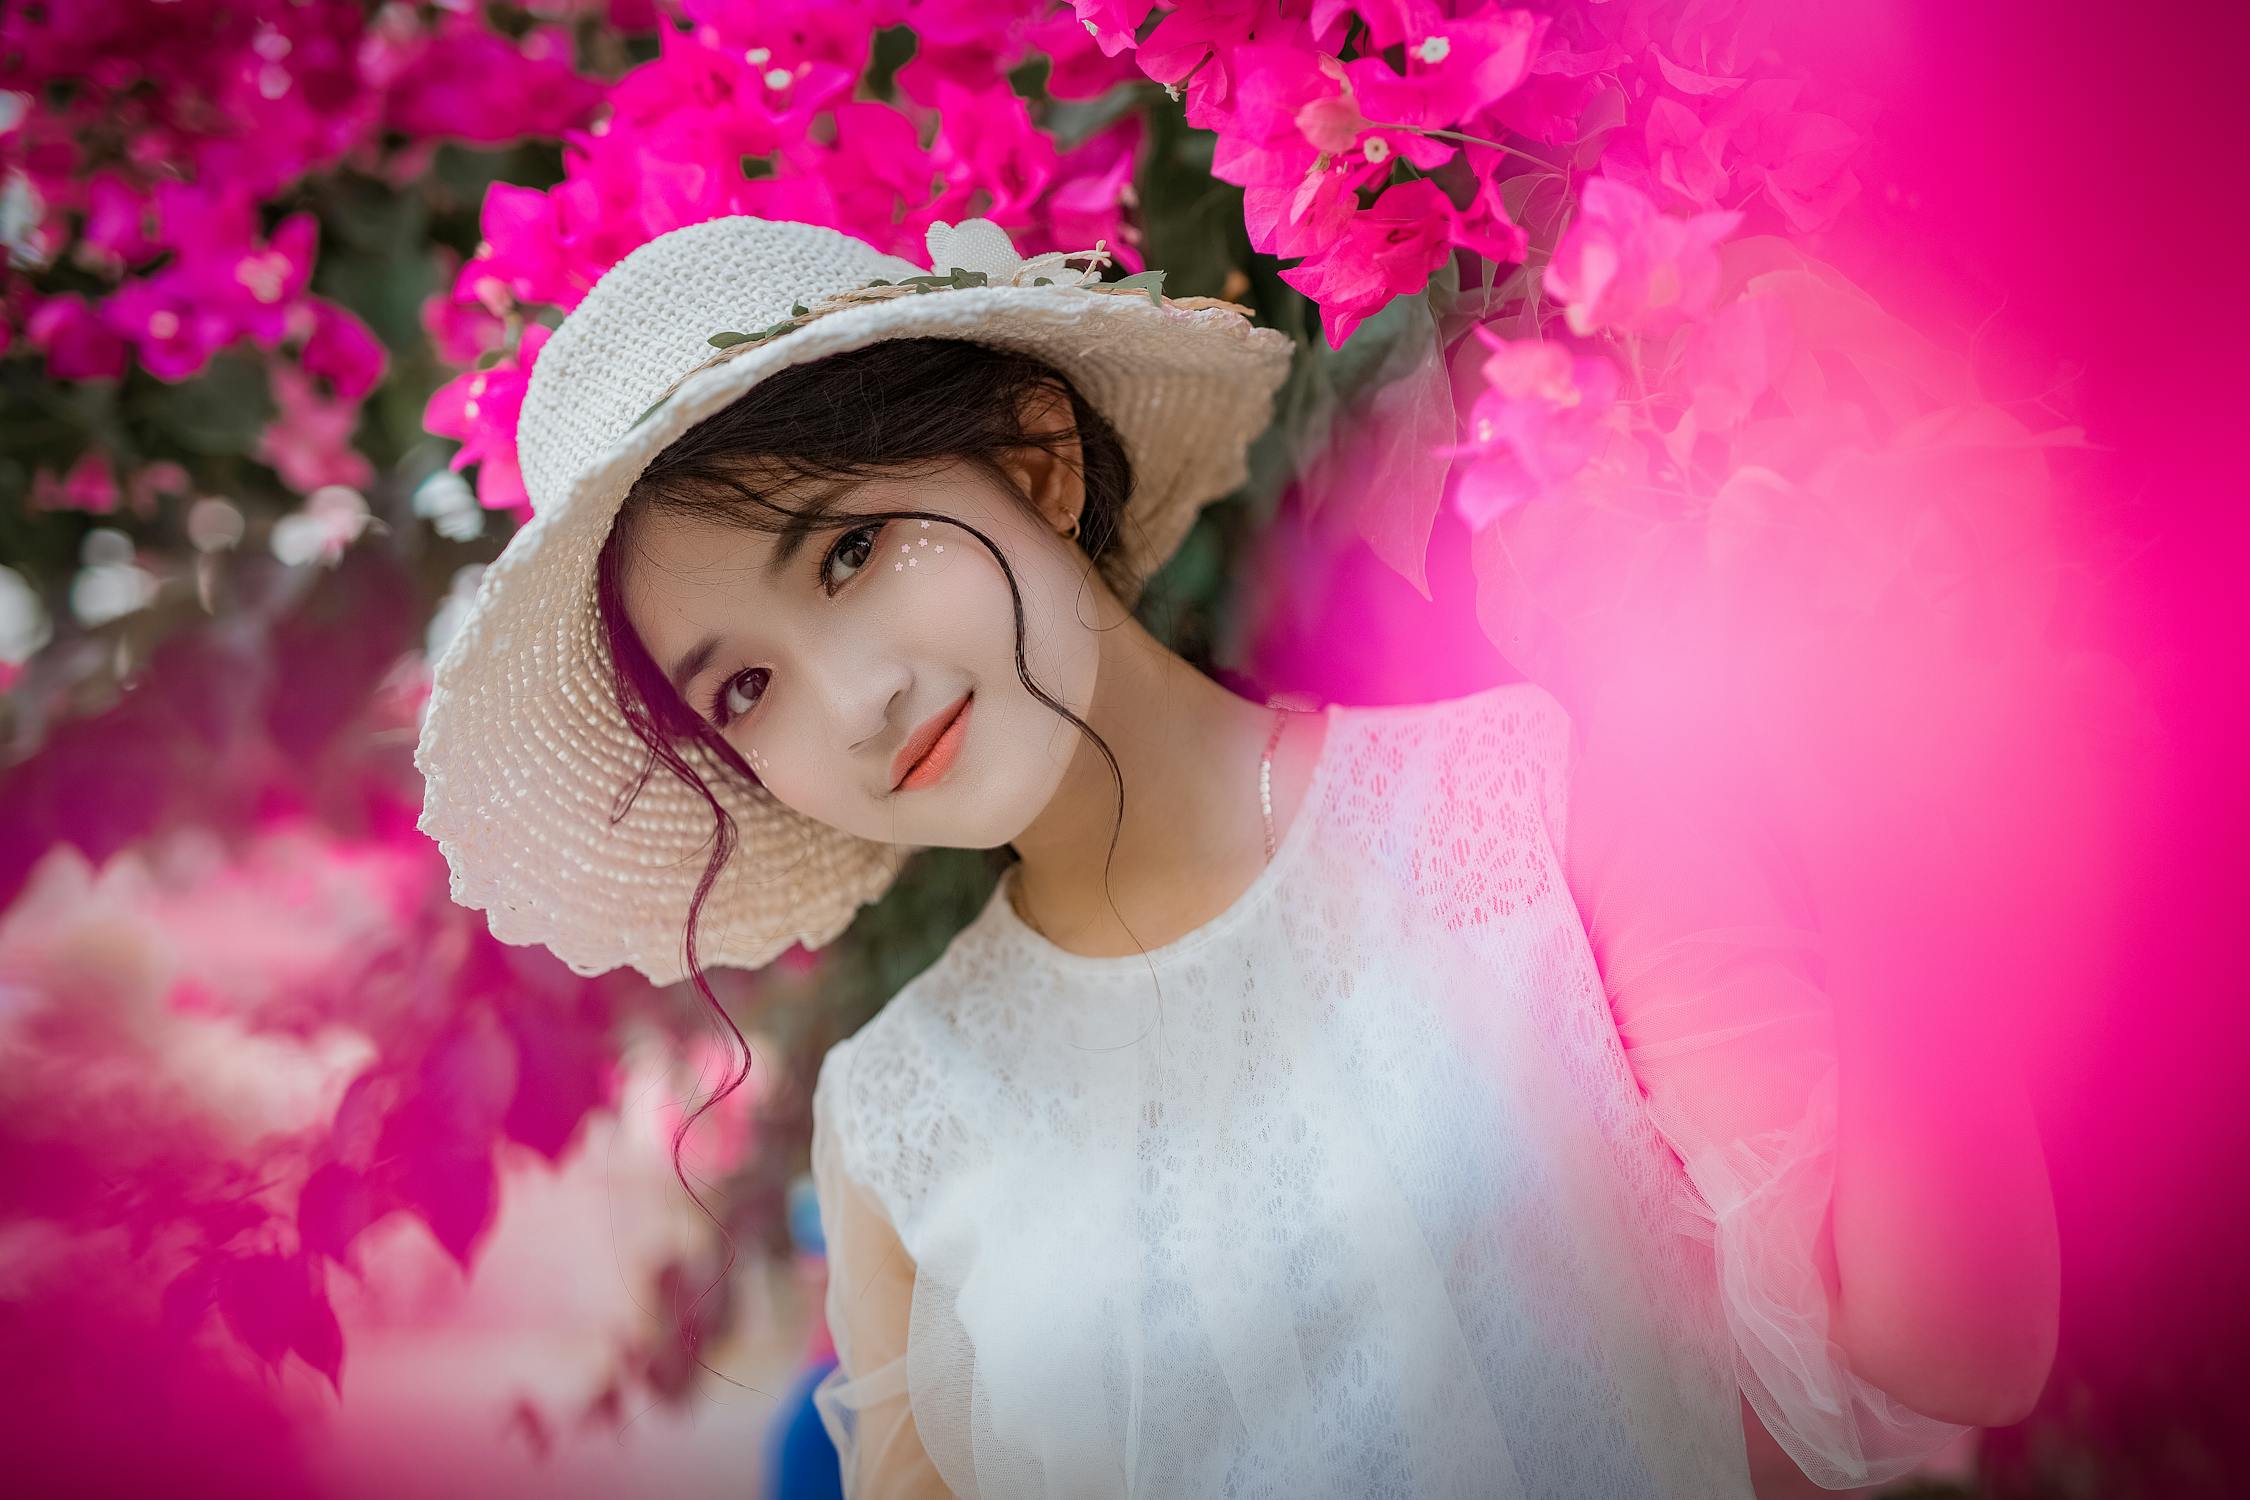 Korean Girl Photo by Tuấn Kiệt Jr. from Pexels